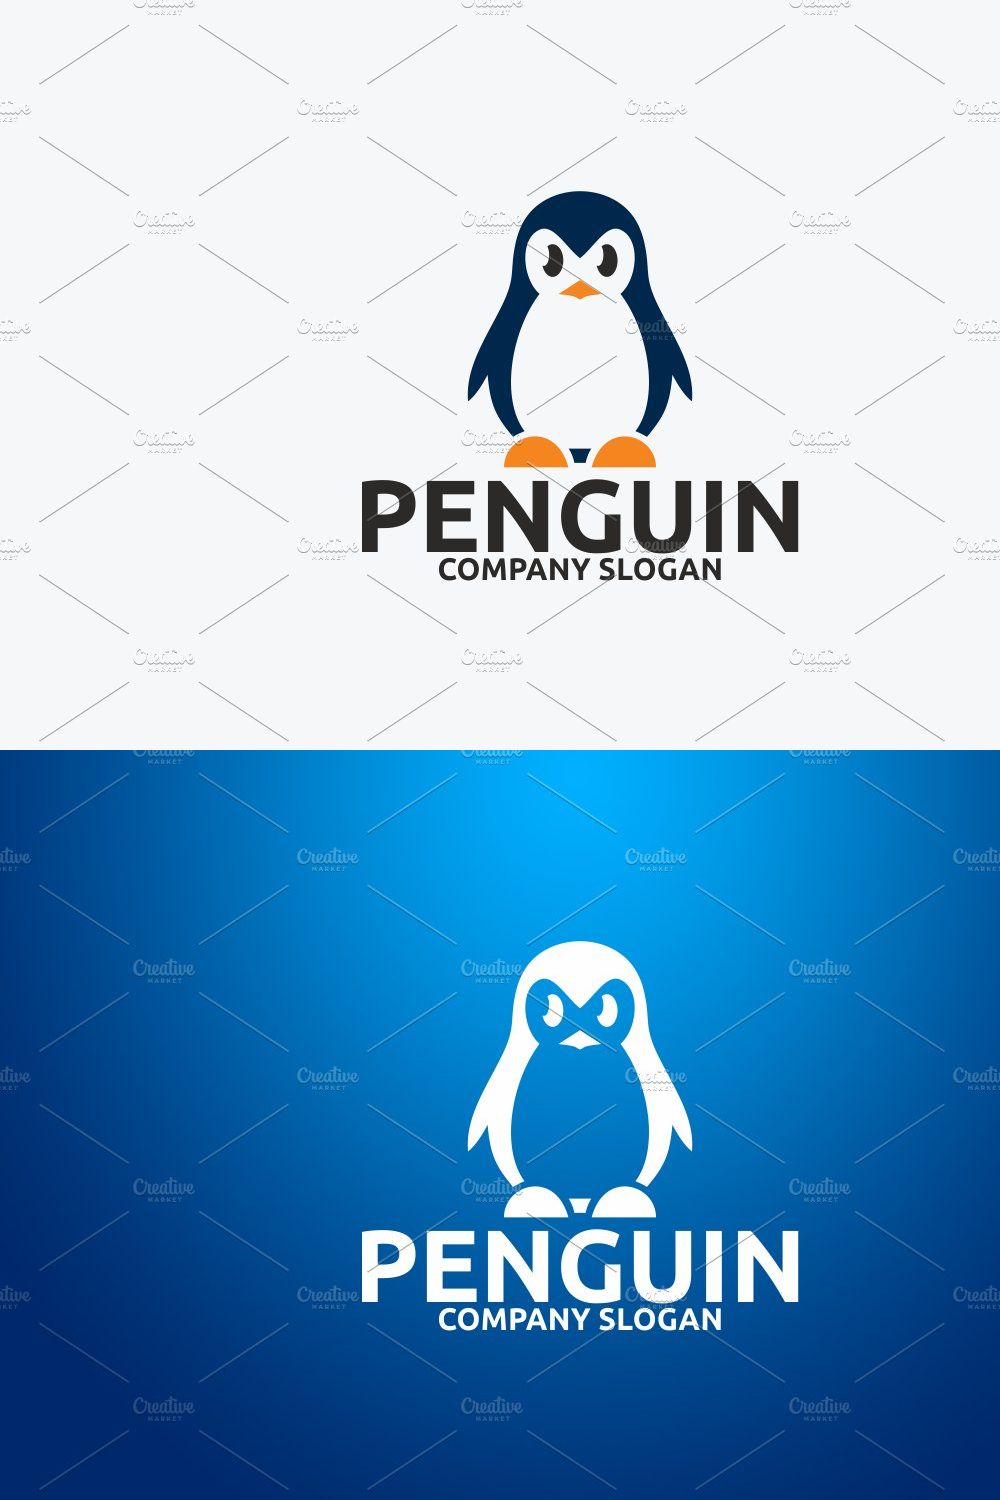 Penguin pinterest preview image.